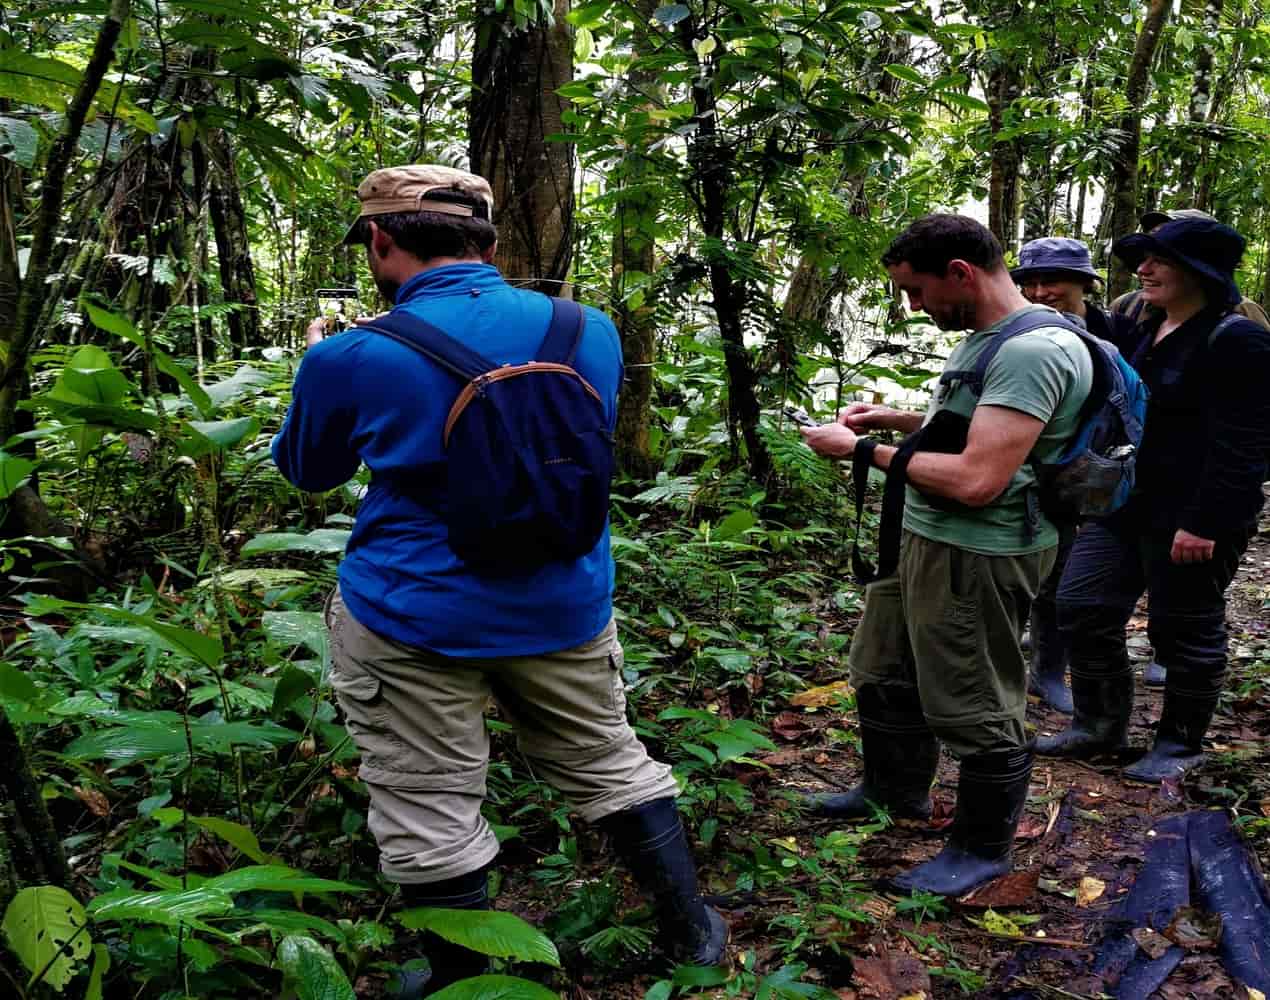 Travelers enjoy learning about the Amazon Rainforest